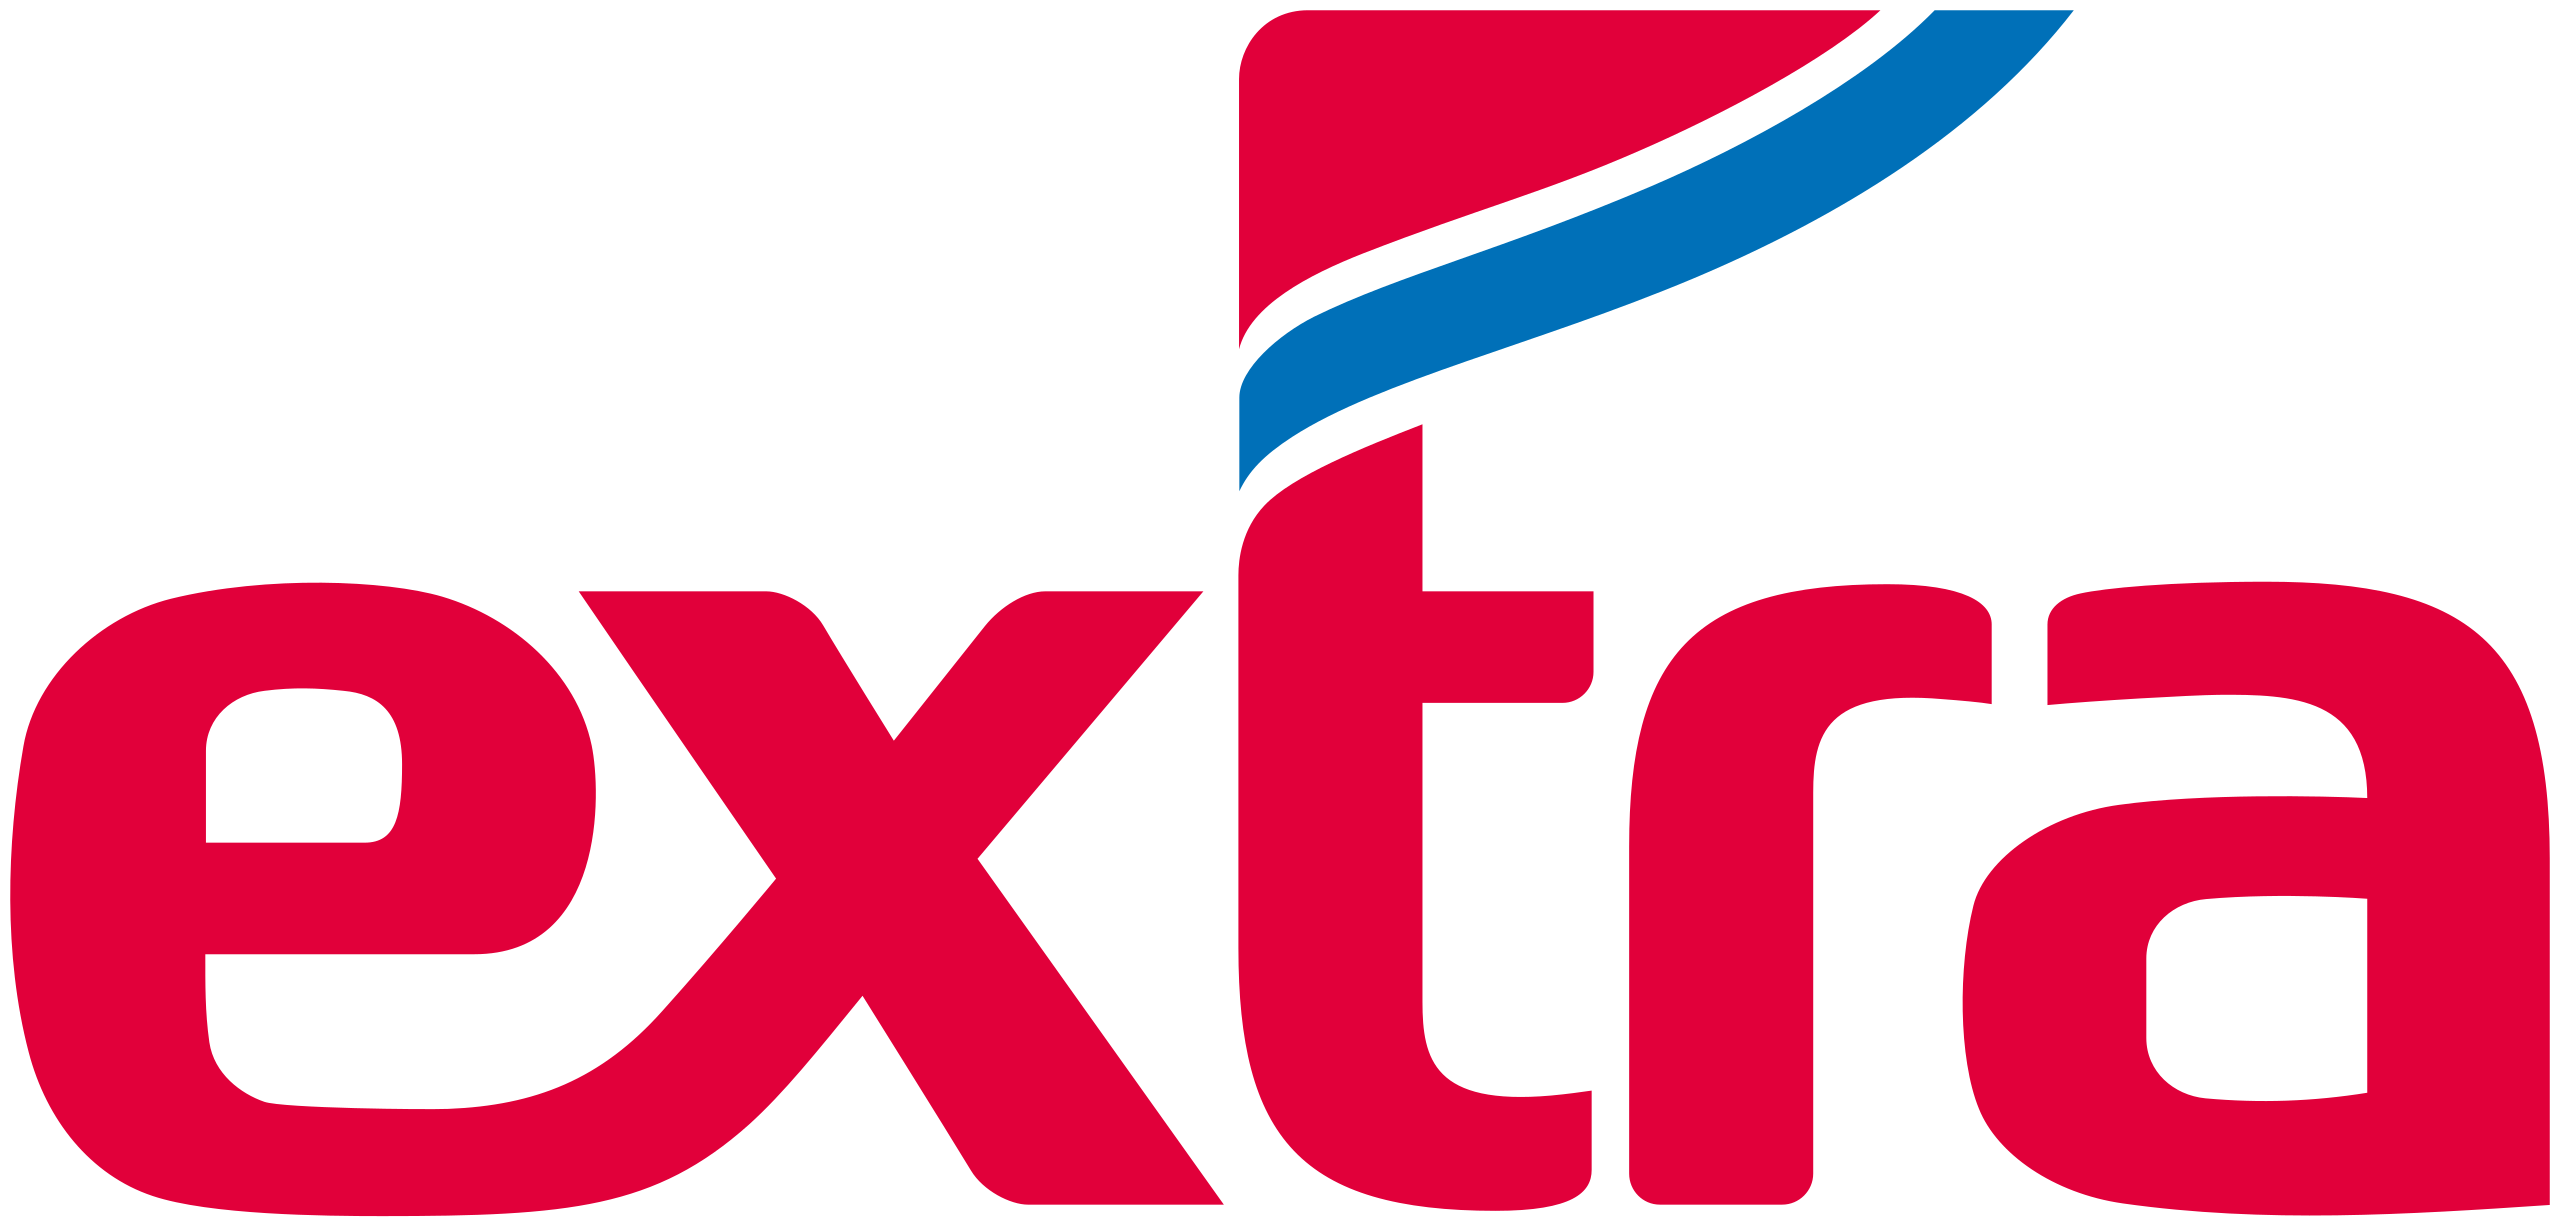 2560px-Extra_logo_2005.svg